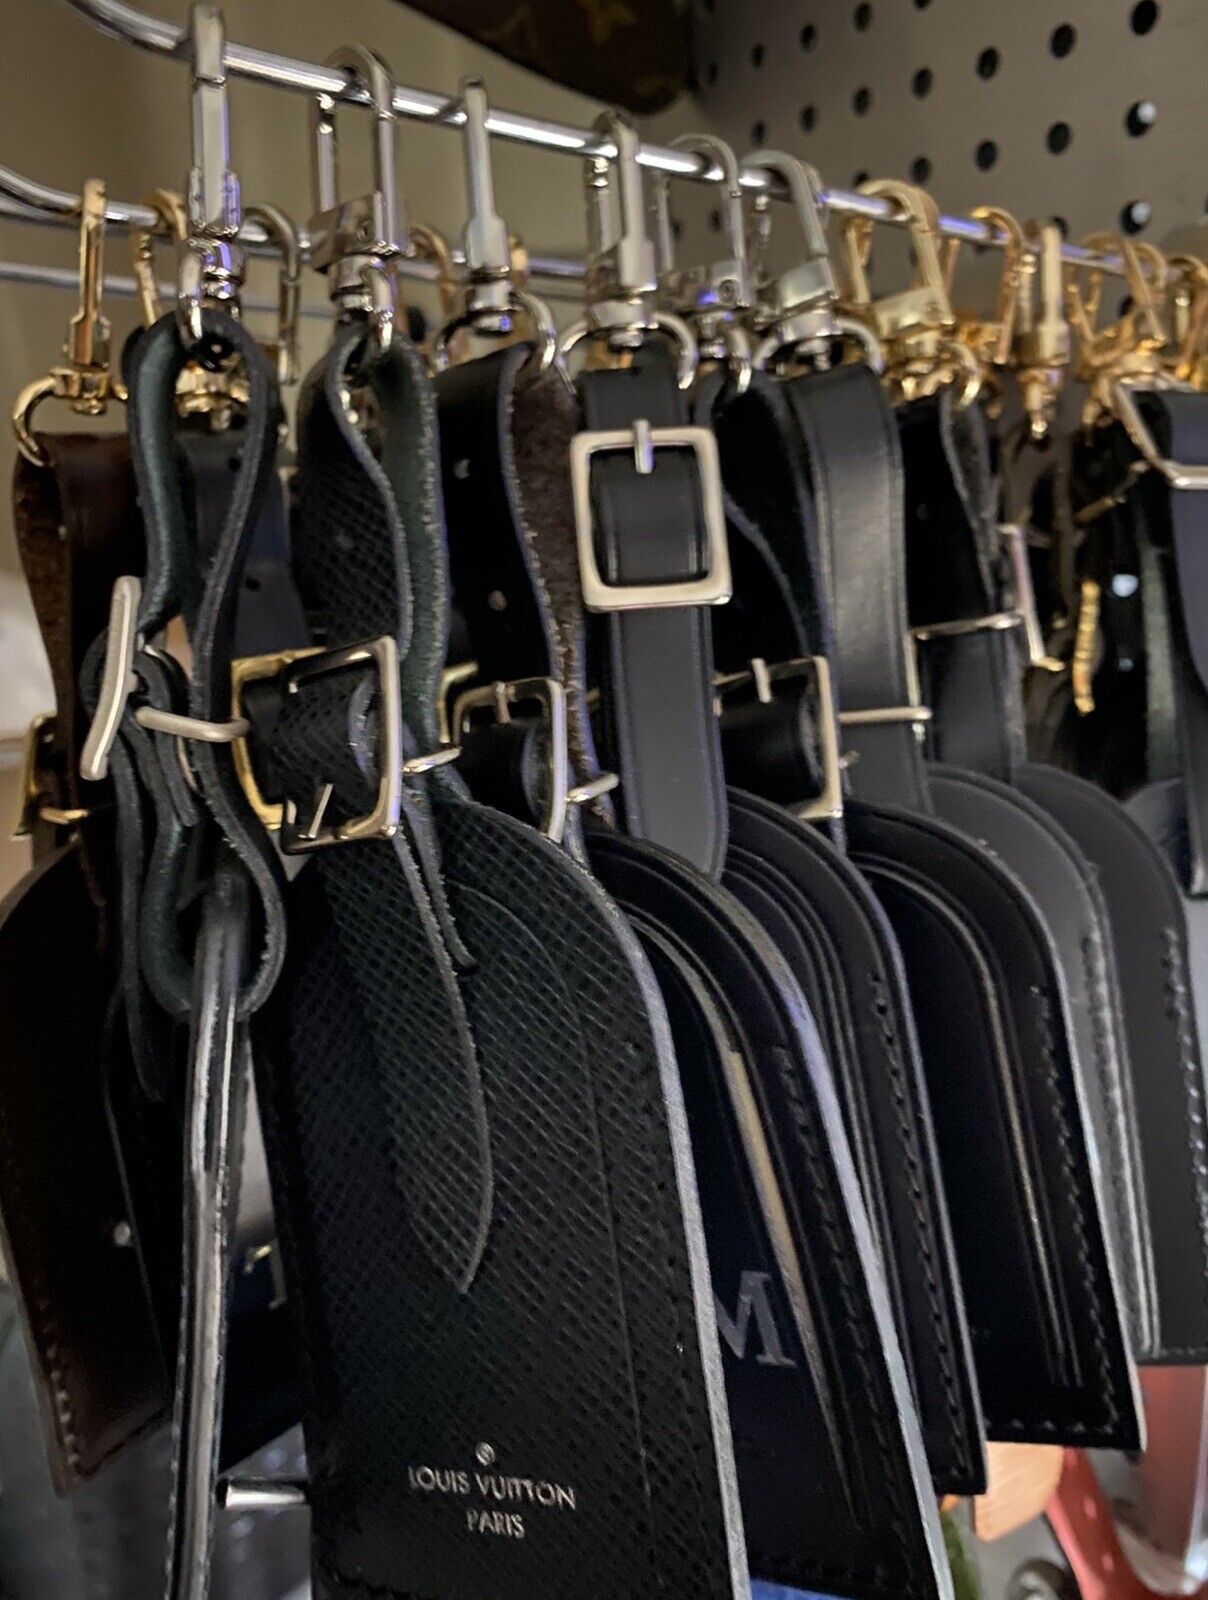 Louis Vuitton Luggage Tag Black Calfskin Leather w/ RZ Initials Goldtone -UEC